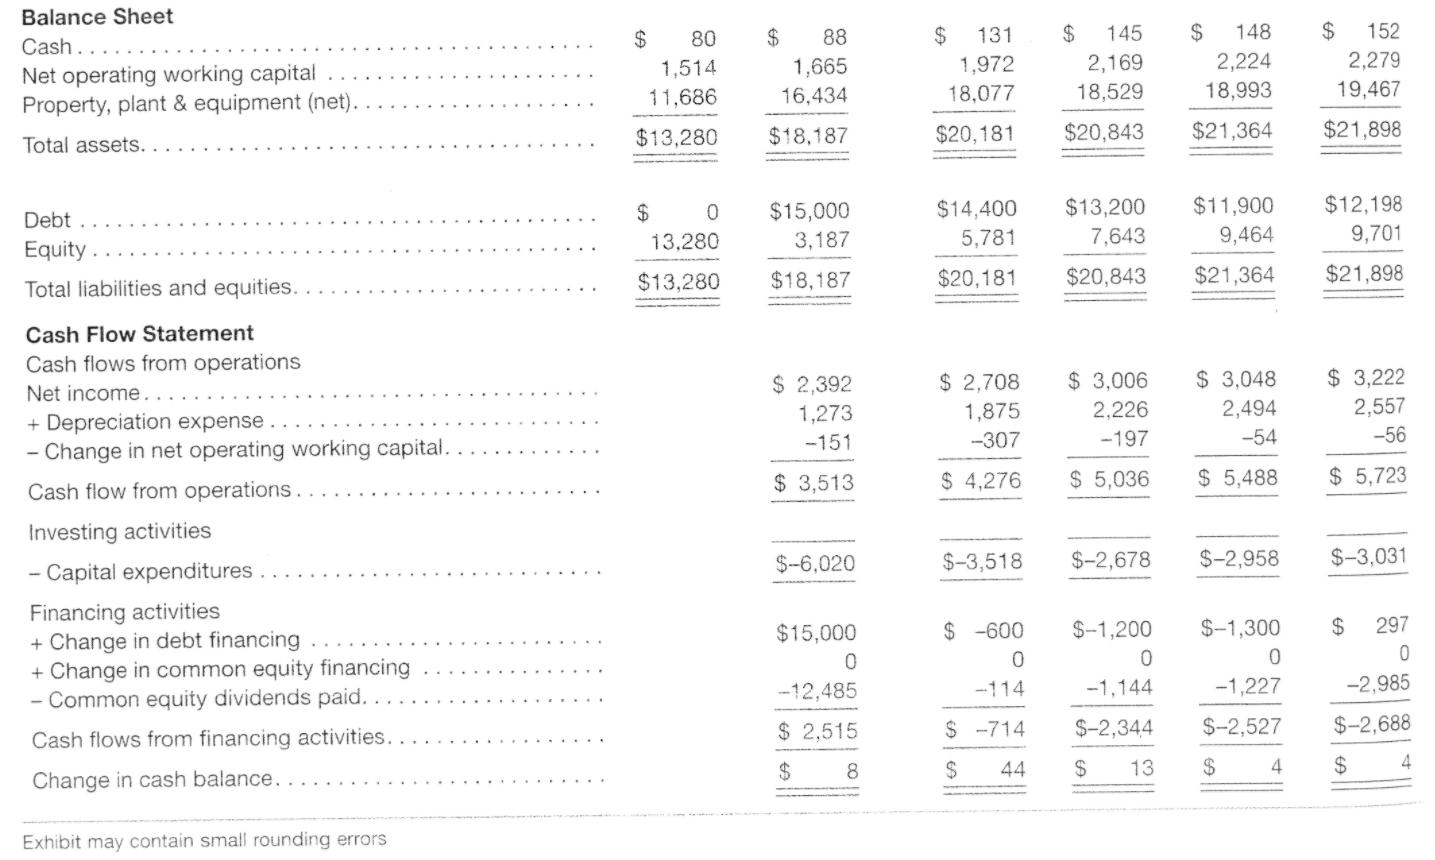 Balance Sheet Cash... $ 80 1,514 11,686 $ 88 1,665 16,434 $ 131 1,972 18,077 $ 145 2,169 18,529 Net operating working capital